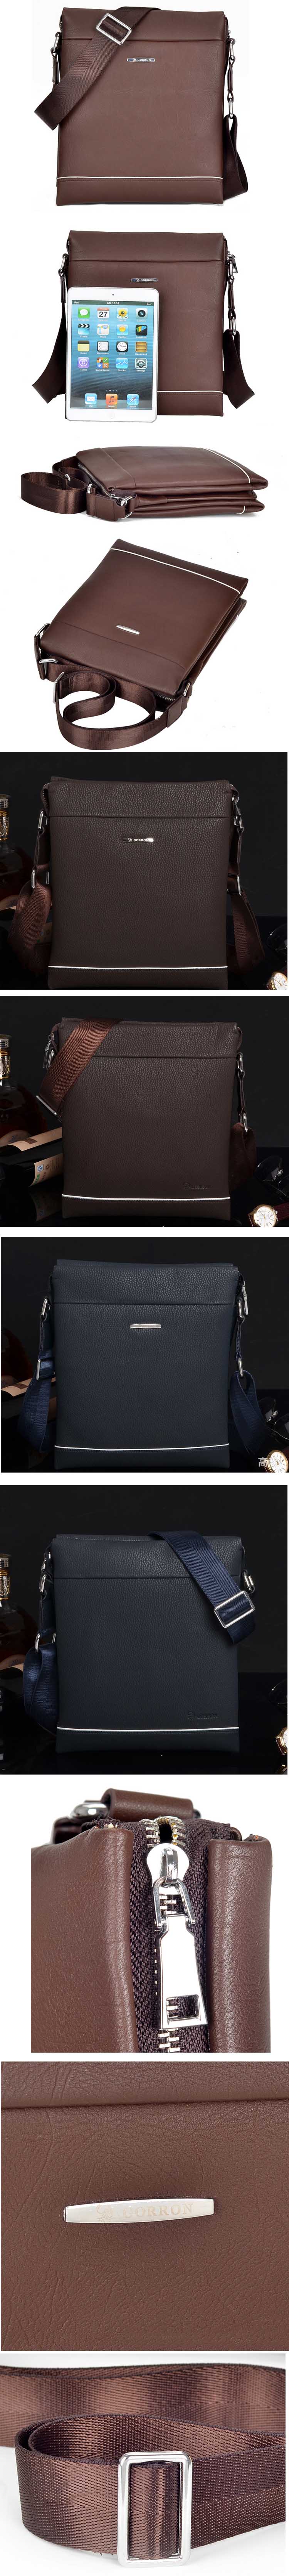 jual tas sling bag merk gordon dengan bahan kulit sintetis branded